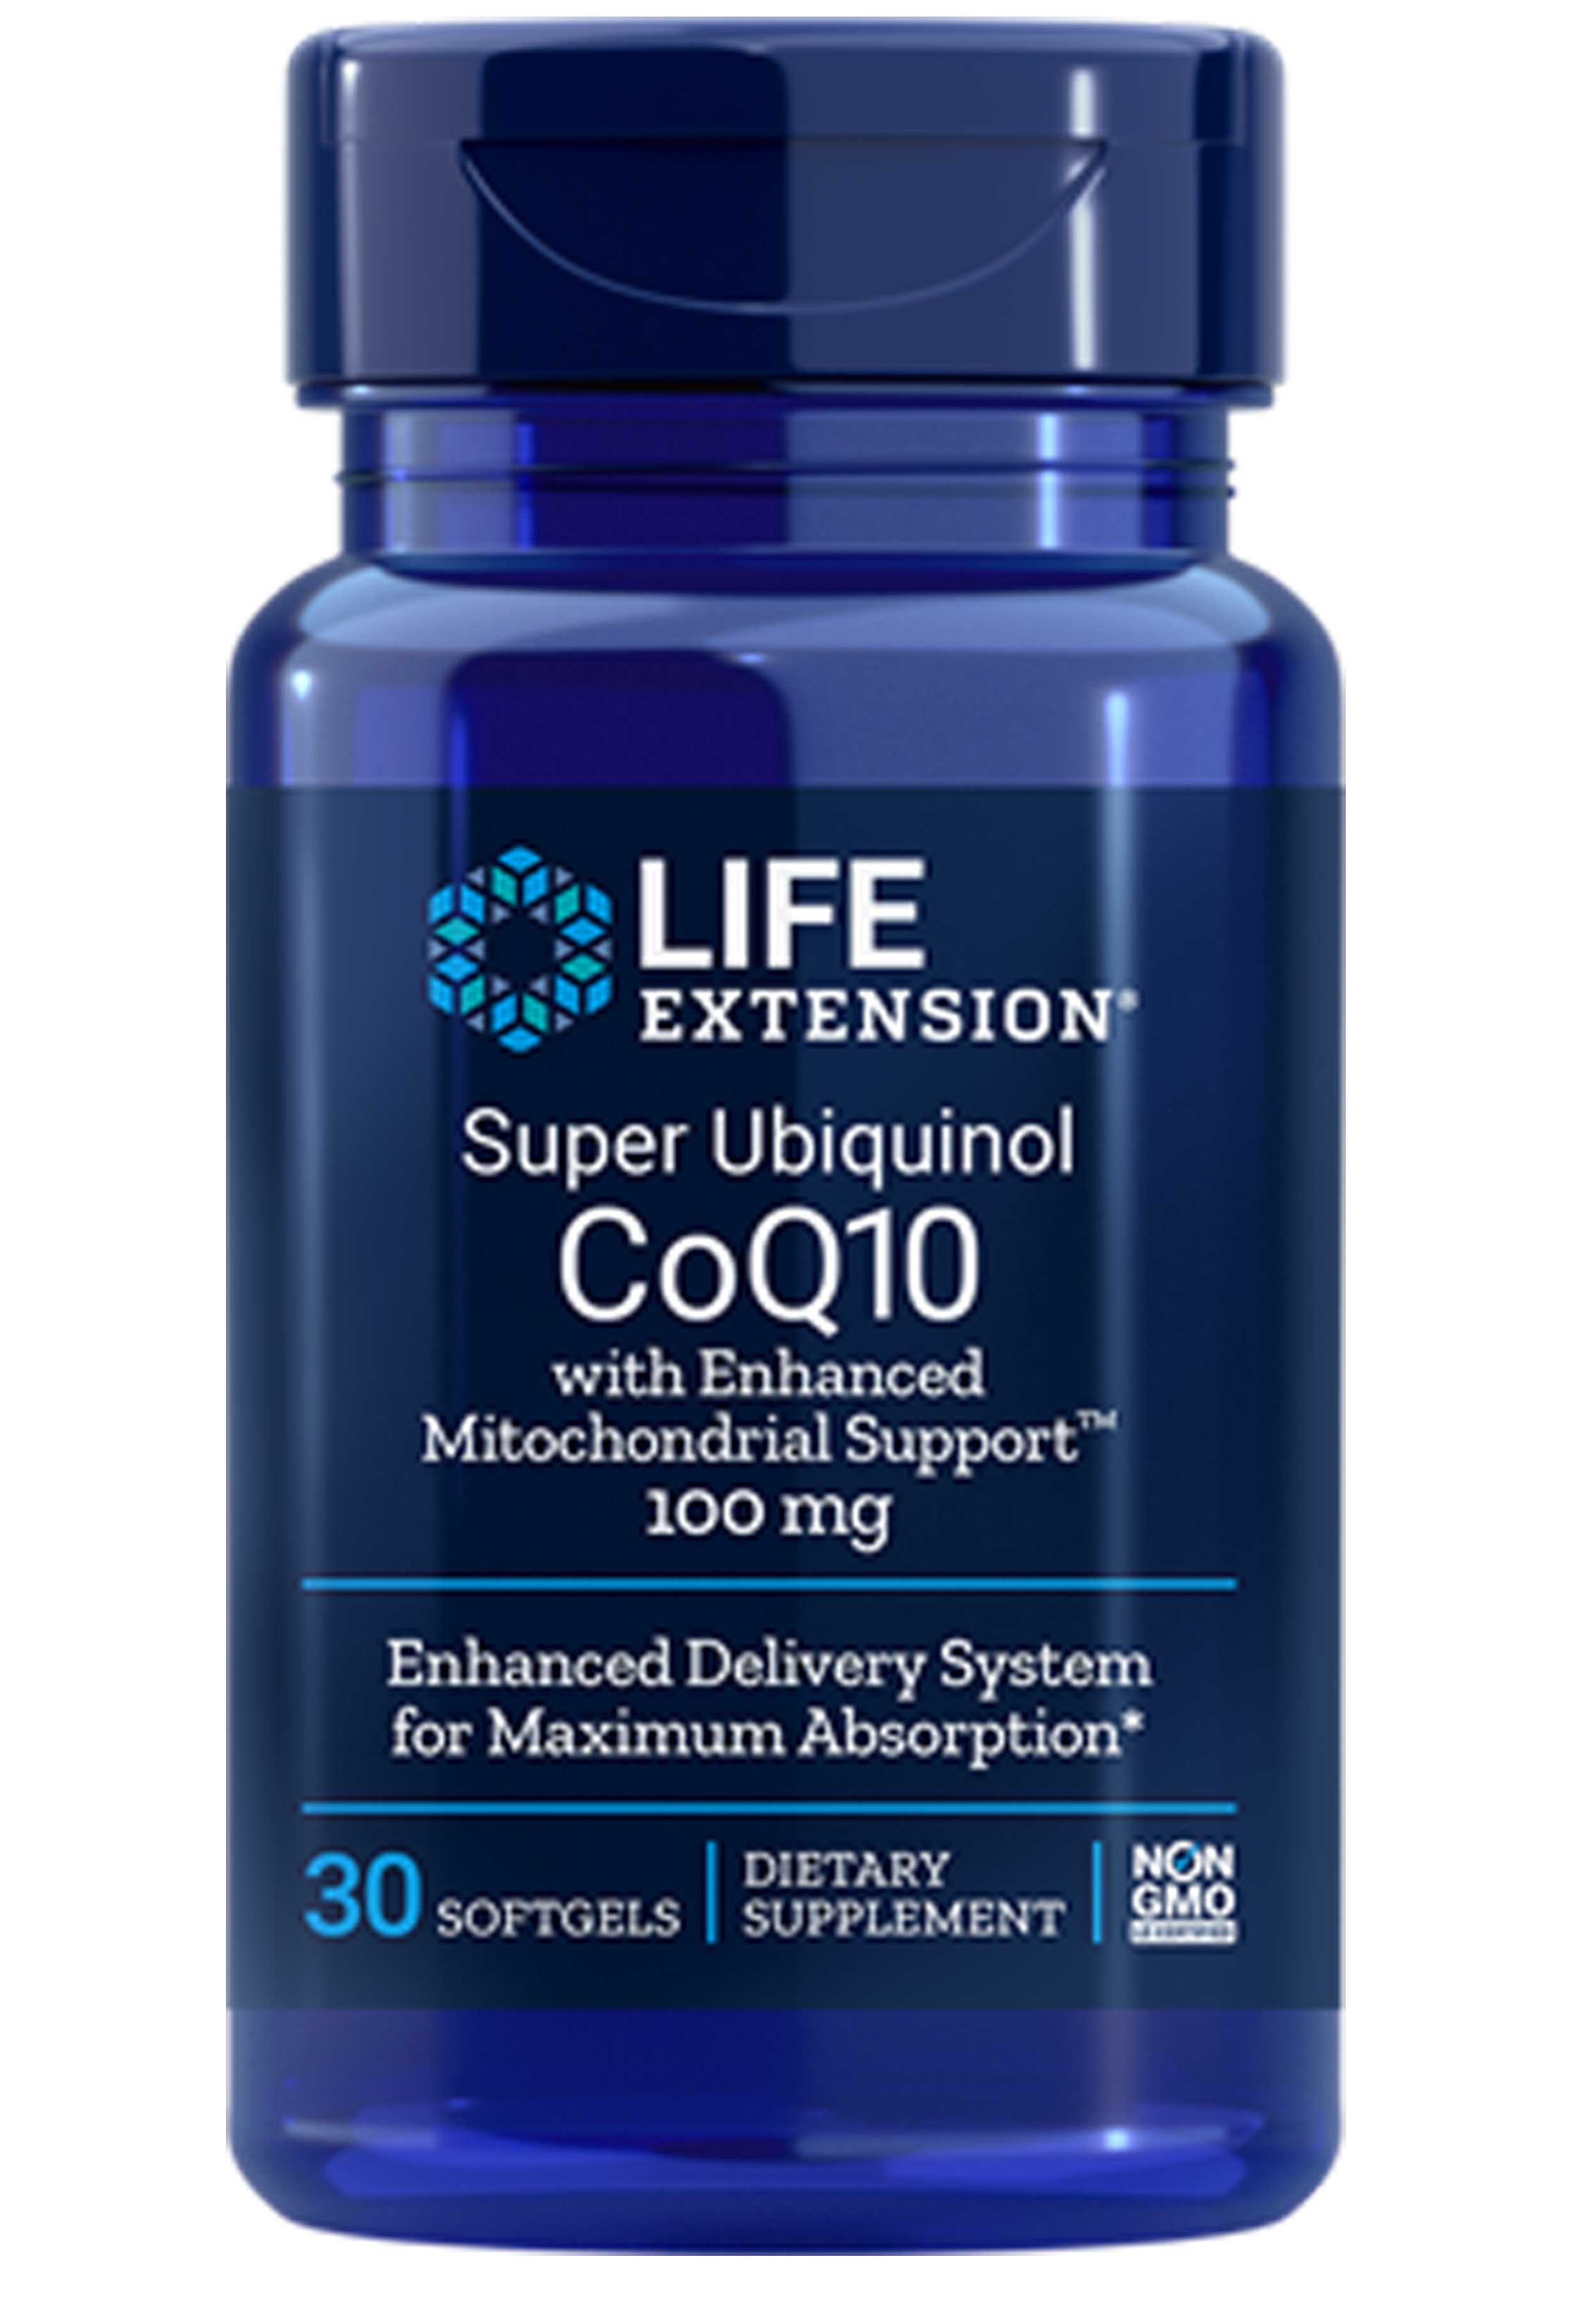 Life Extension Super Ubiquinol CoQ10 with Enhanced Mitochondrial Support